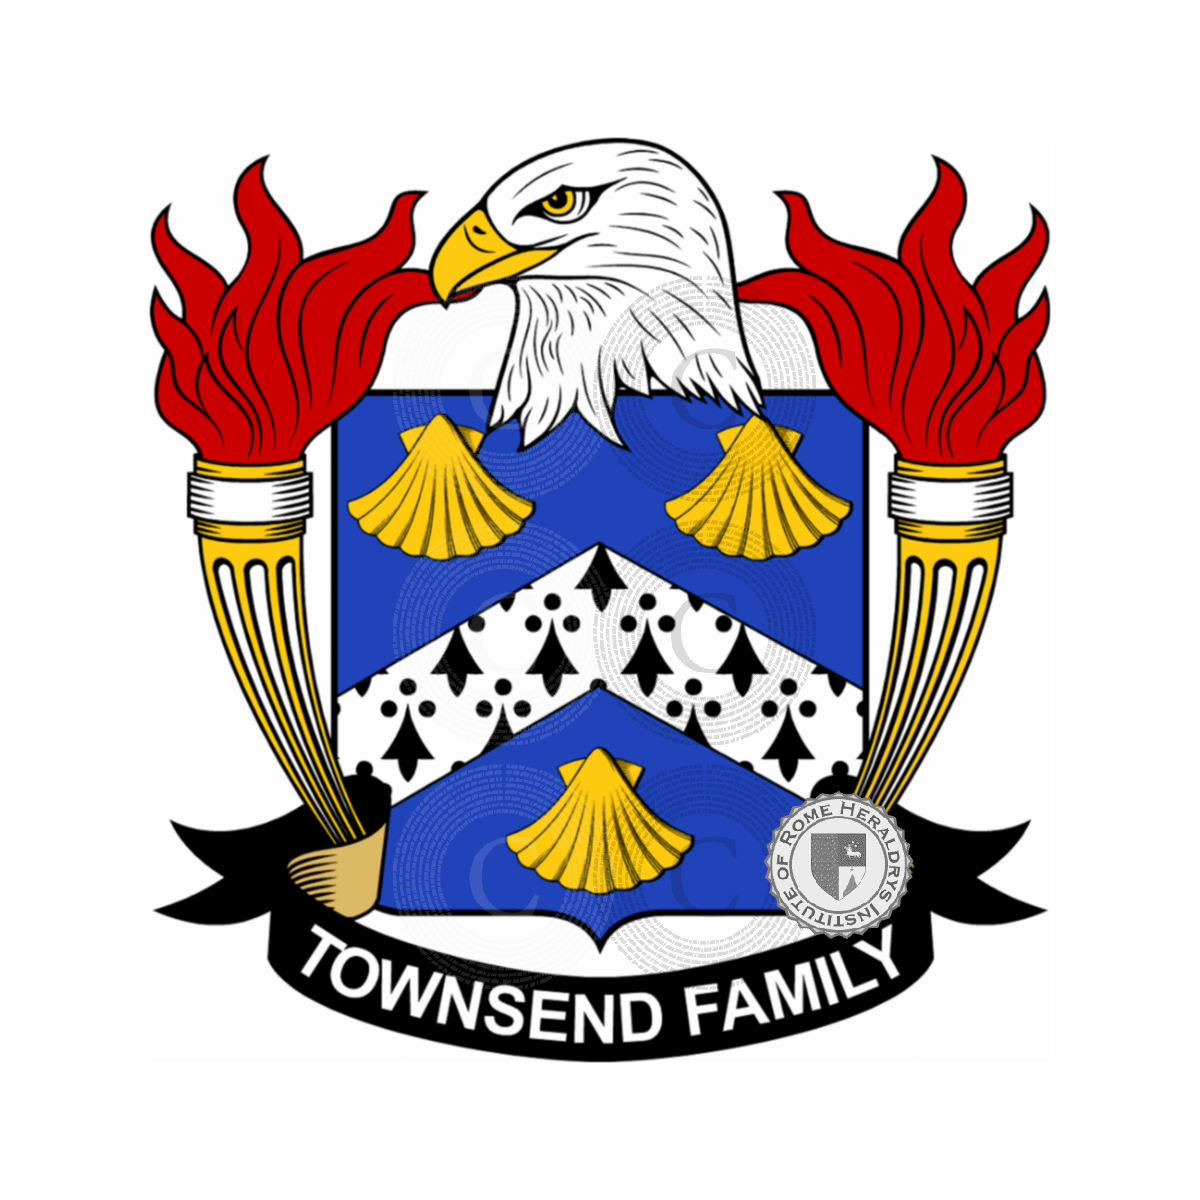 Wappen der FamilieTownsend